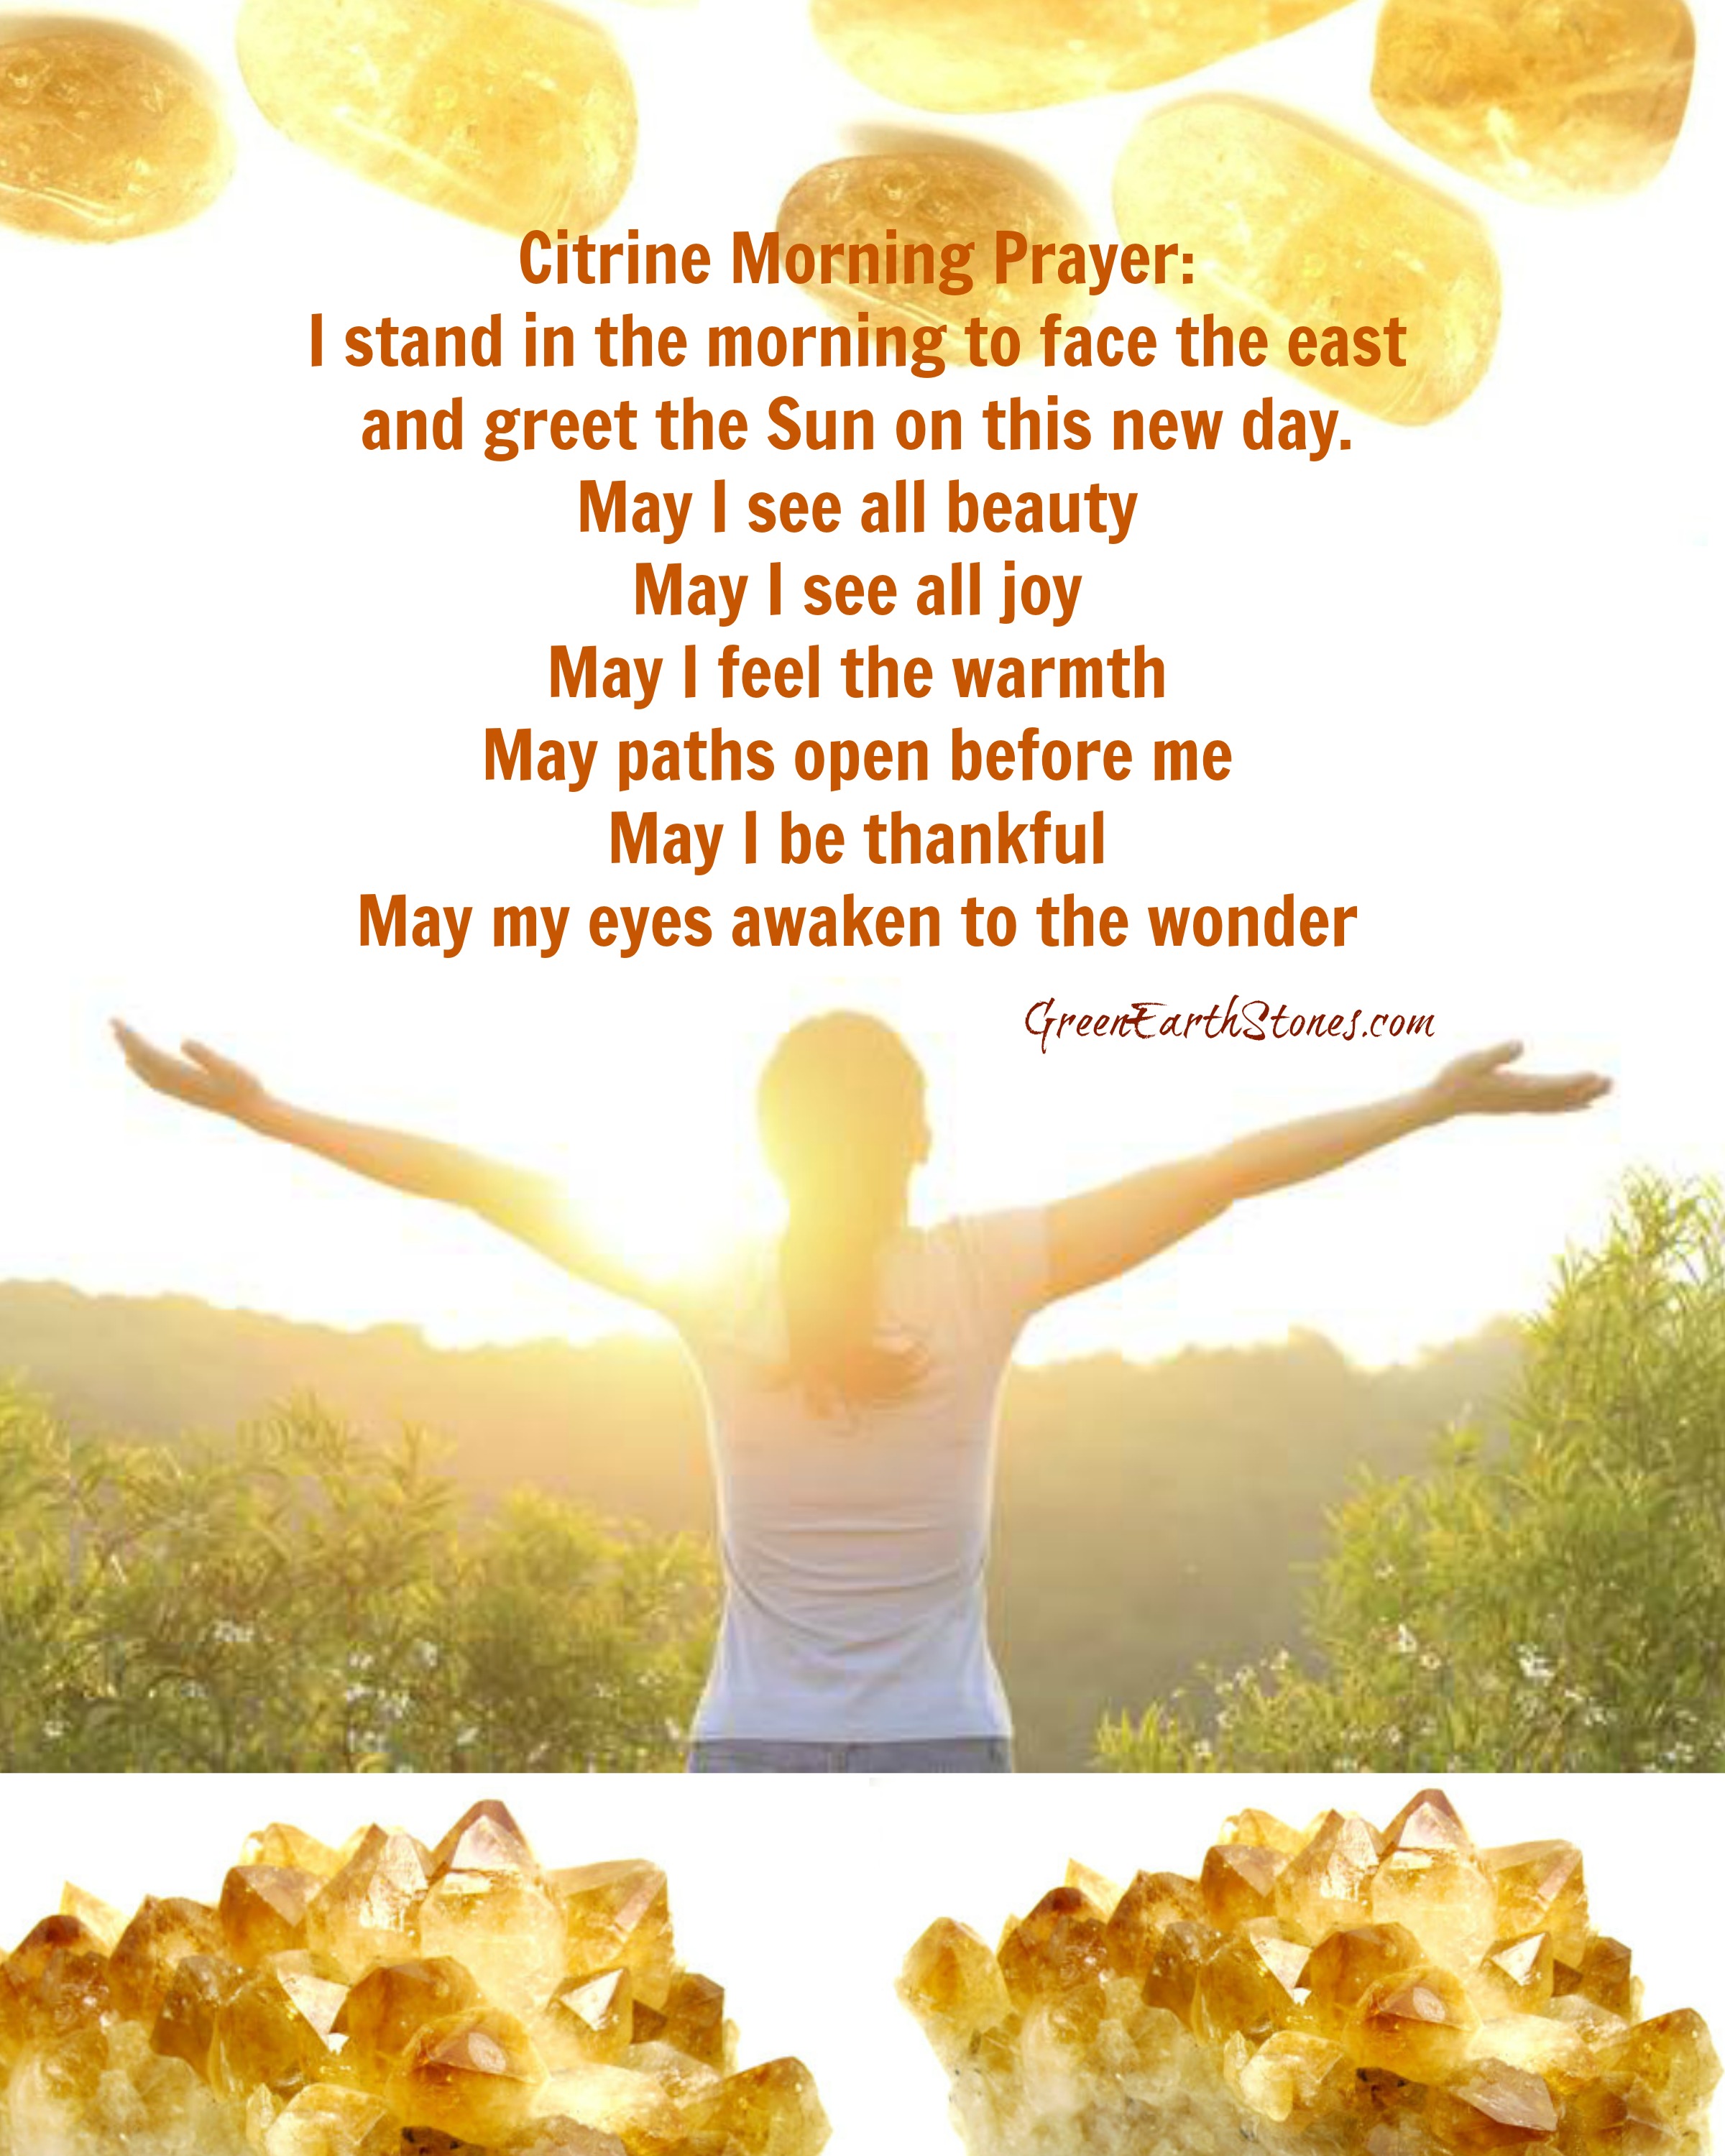 citrine-morning-prayer.jpg